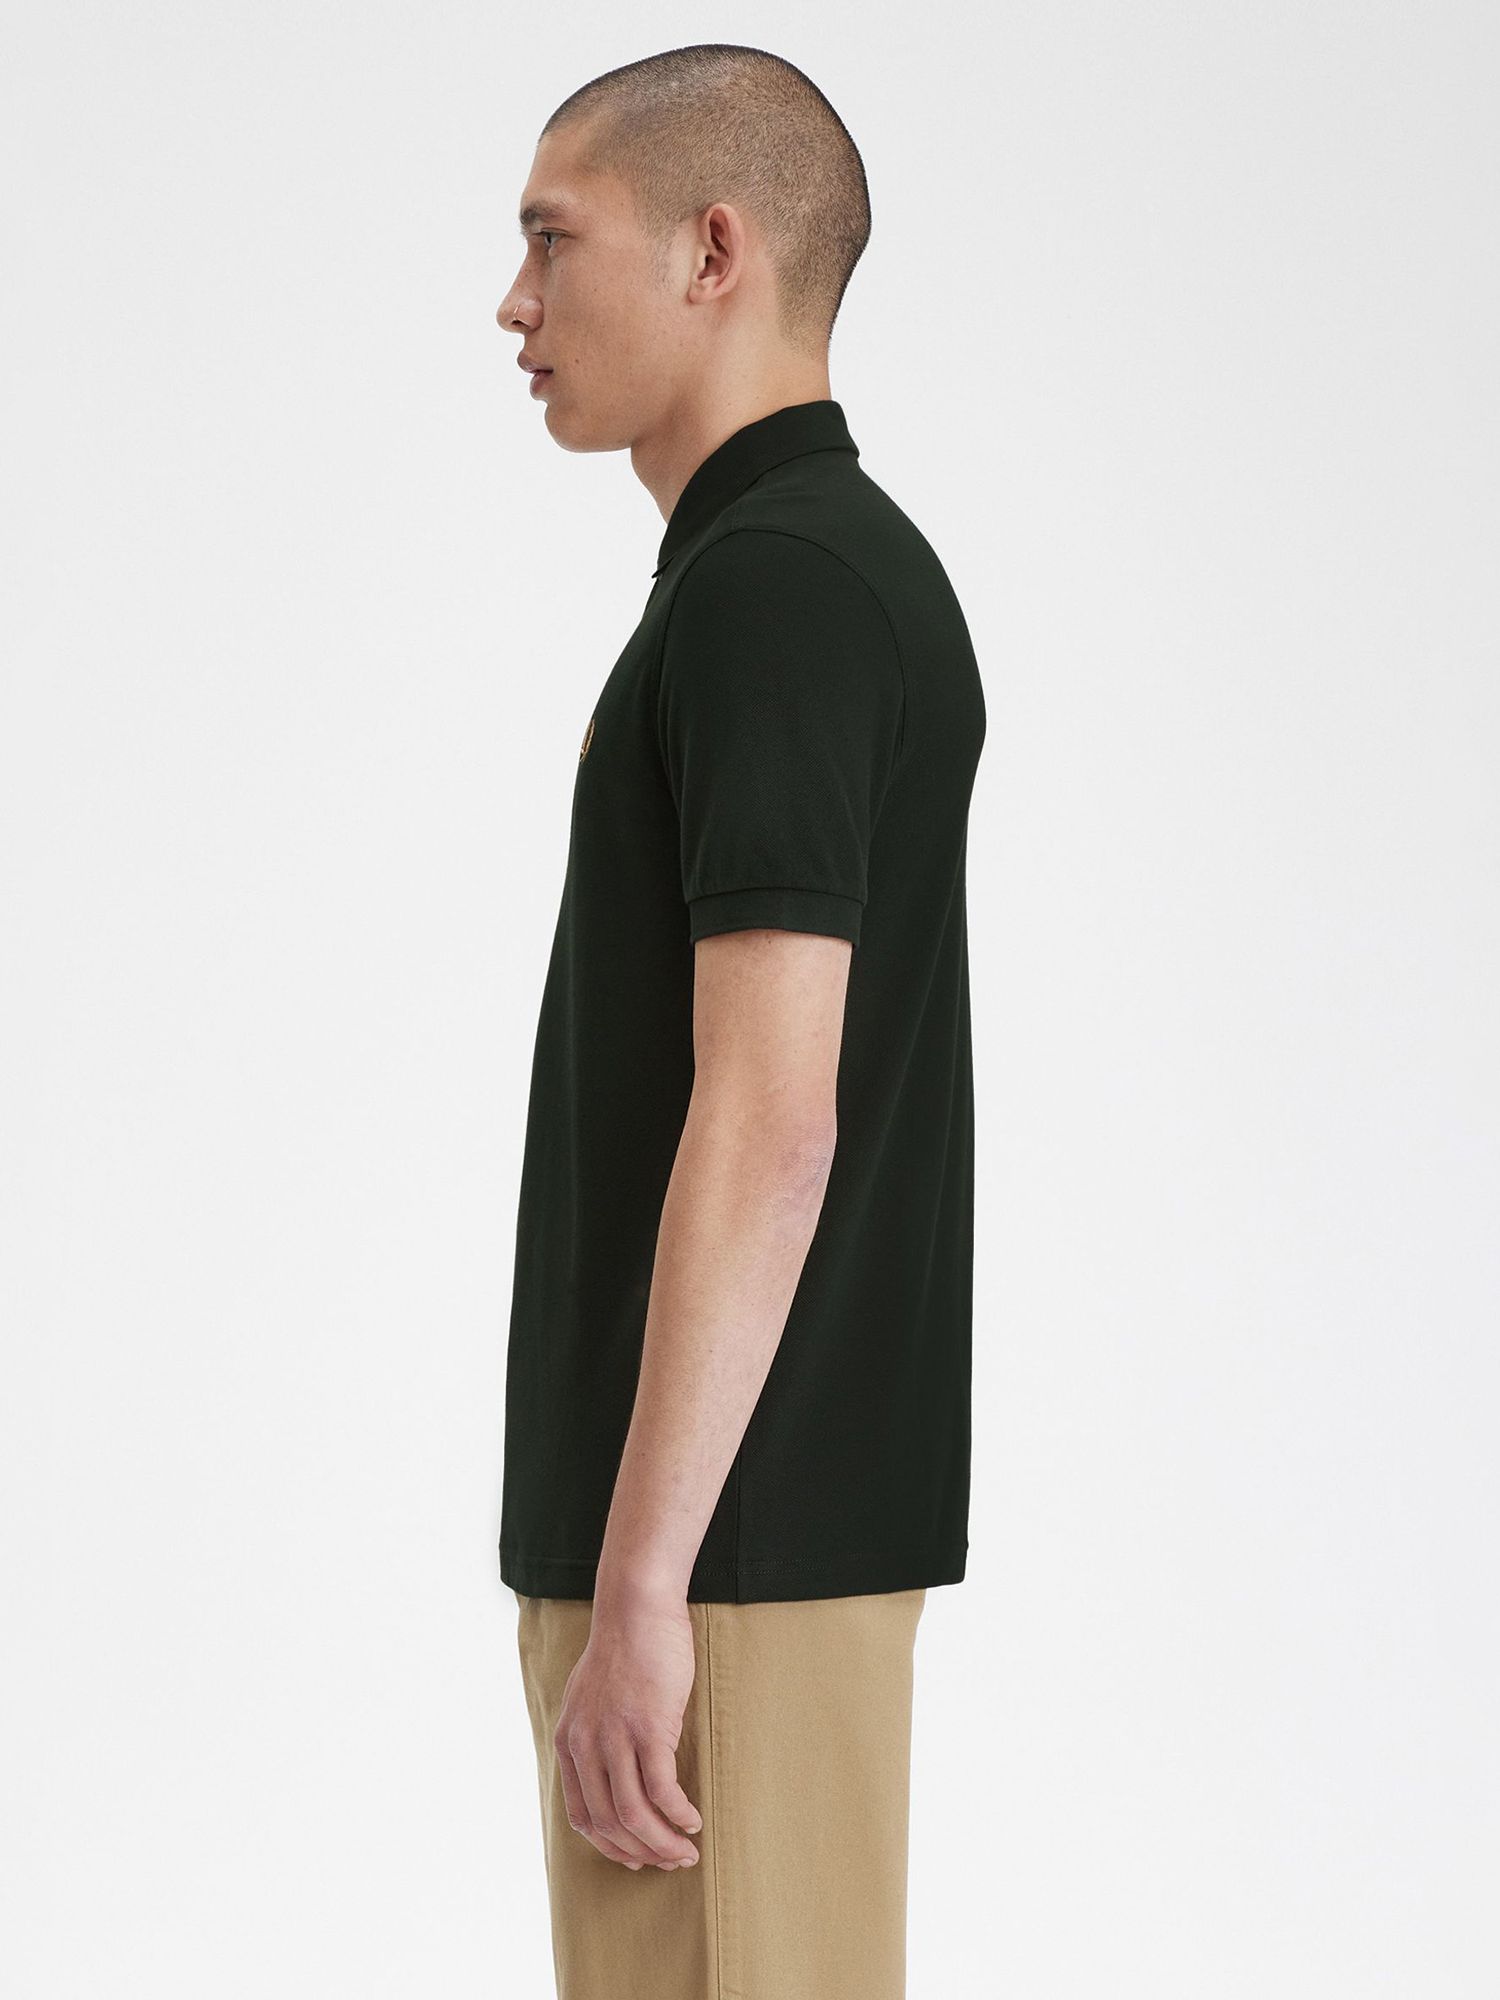 Fred Perry Tennis Short Sleeve T-Shirt, Nghgreen/Lghrust, XL